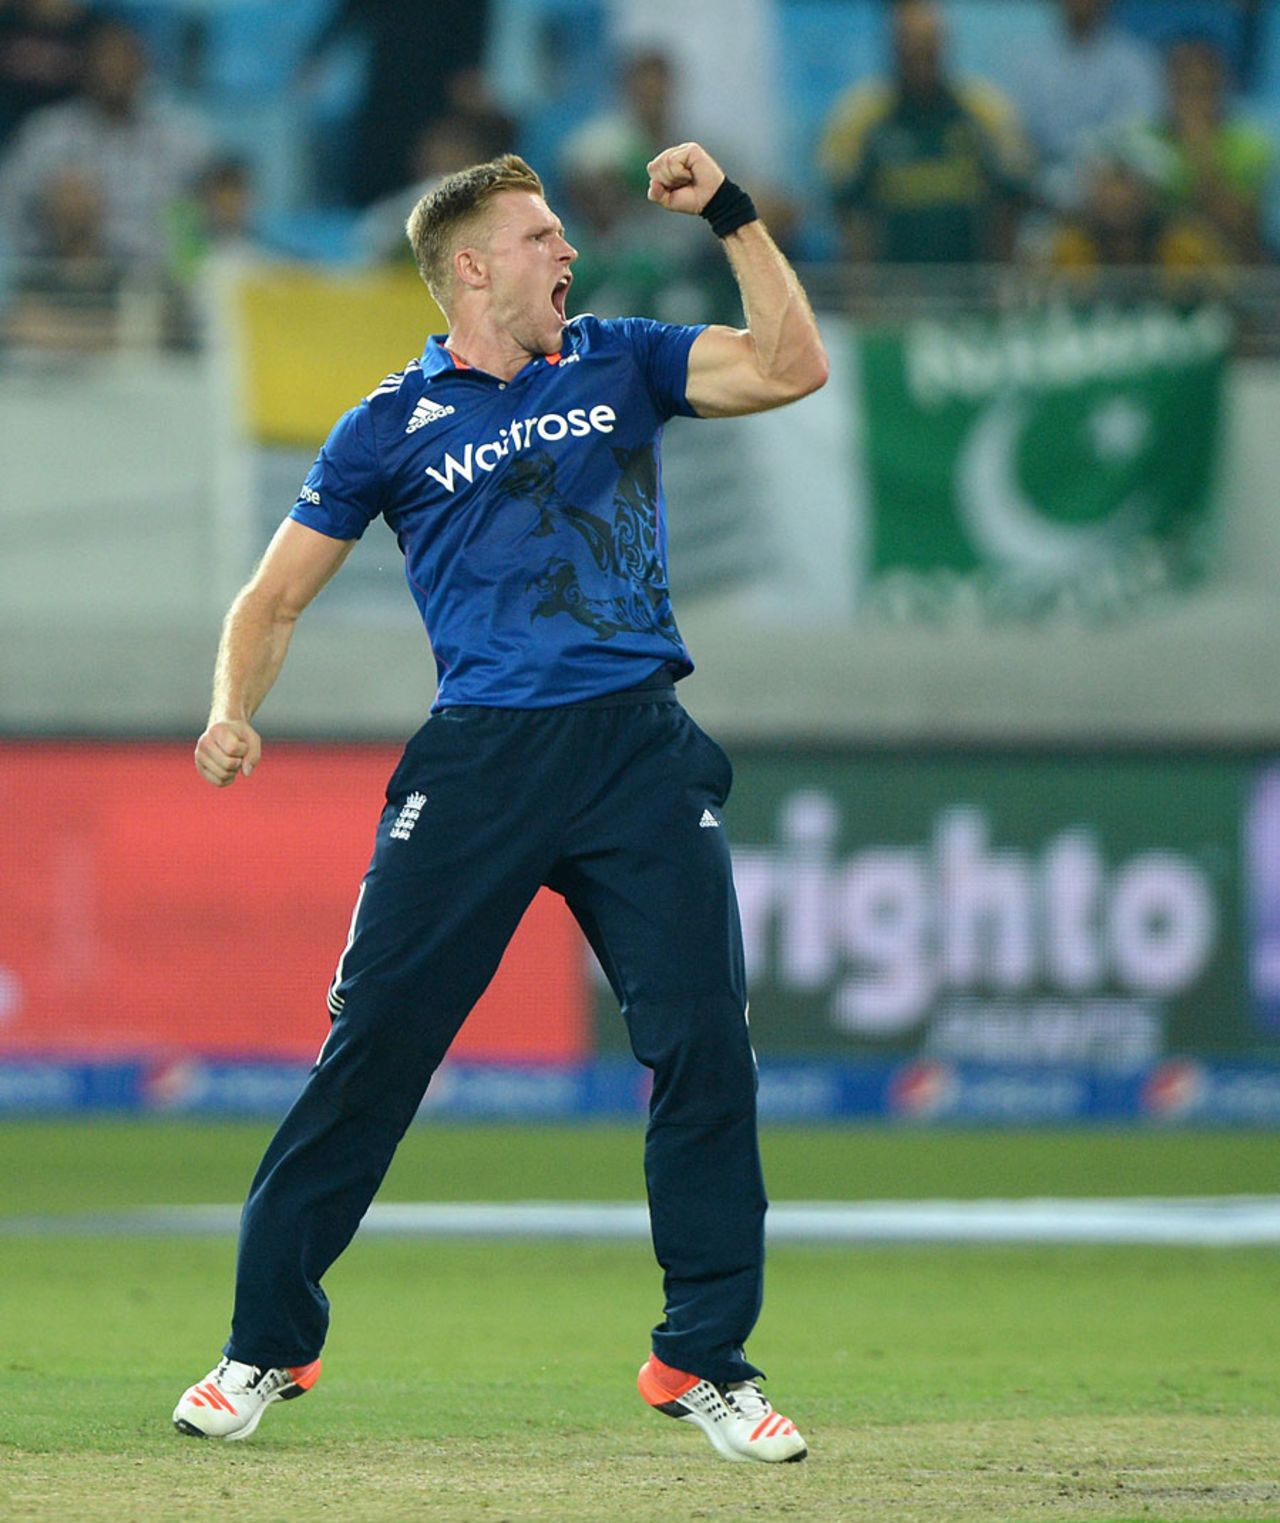 David Willey provided England with early breakthroughs, Pakistan v England, 4th ODI, Dubai, November 20, 2015